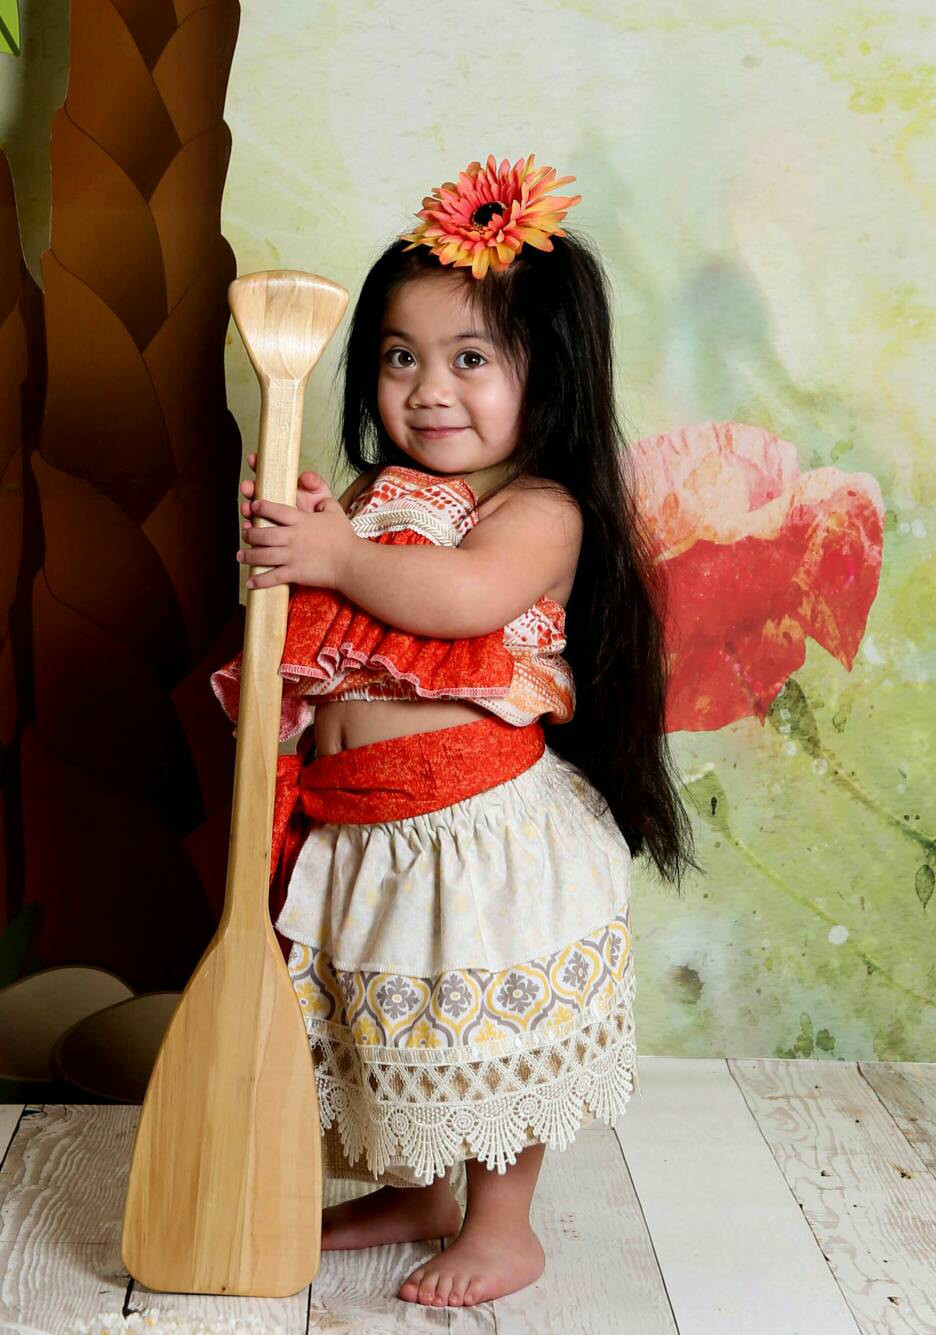 Best ideas about Moana DIY Costume
. Save or Pin Moana Costume Moana Dress Hawaiian Princess Costume Moana Now.